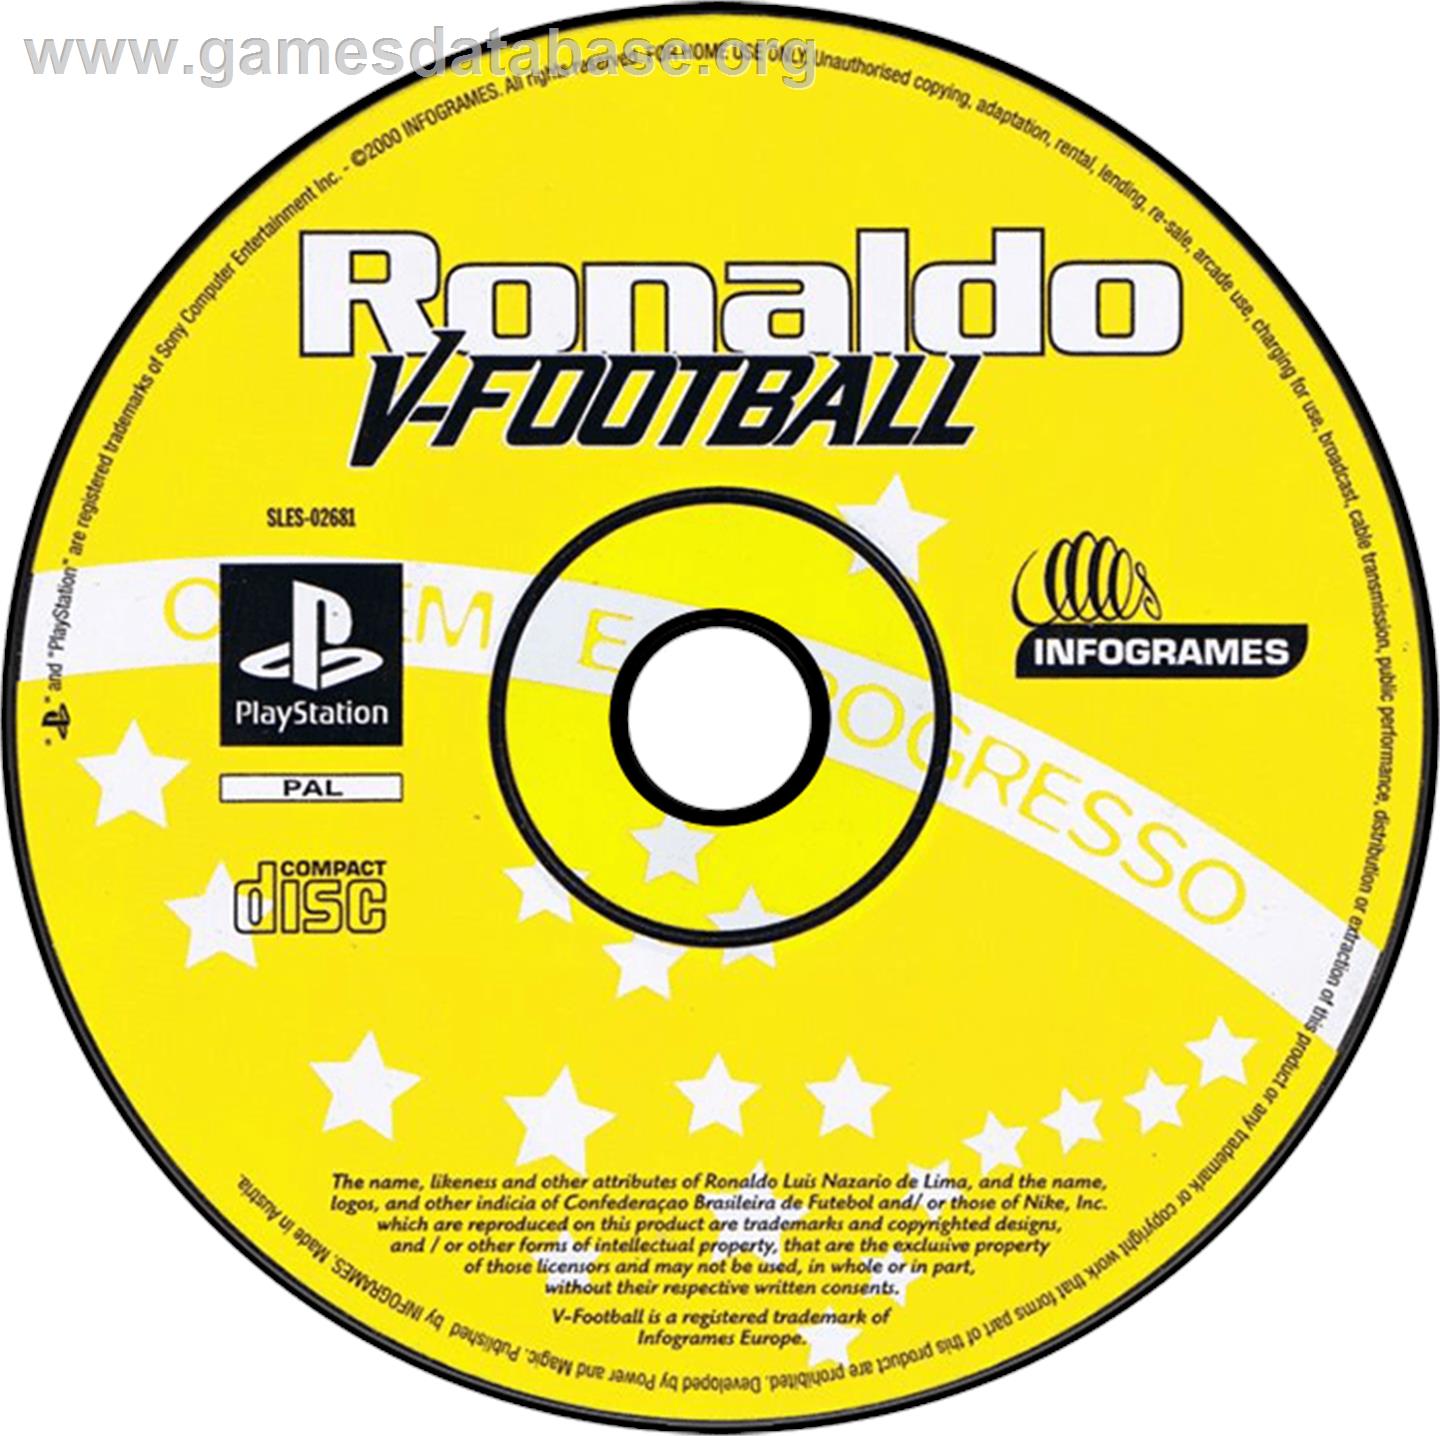 Ronaldo V-Football - Sony Playstation - Artwork - Disc